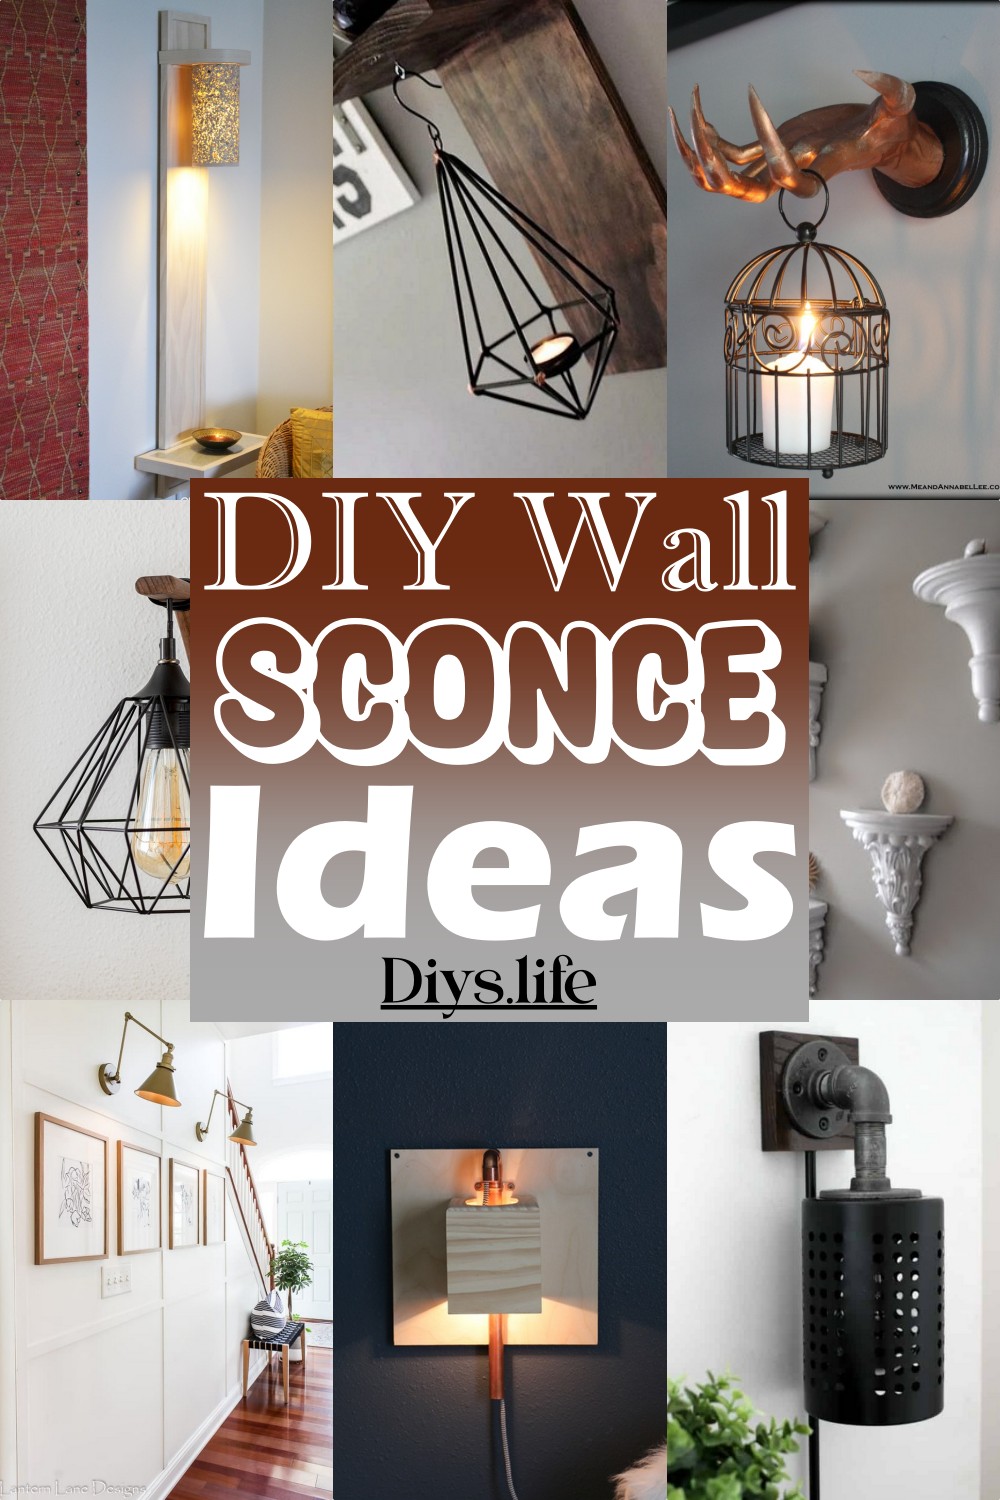 DIY Wall Sconce Ideas